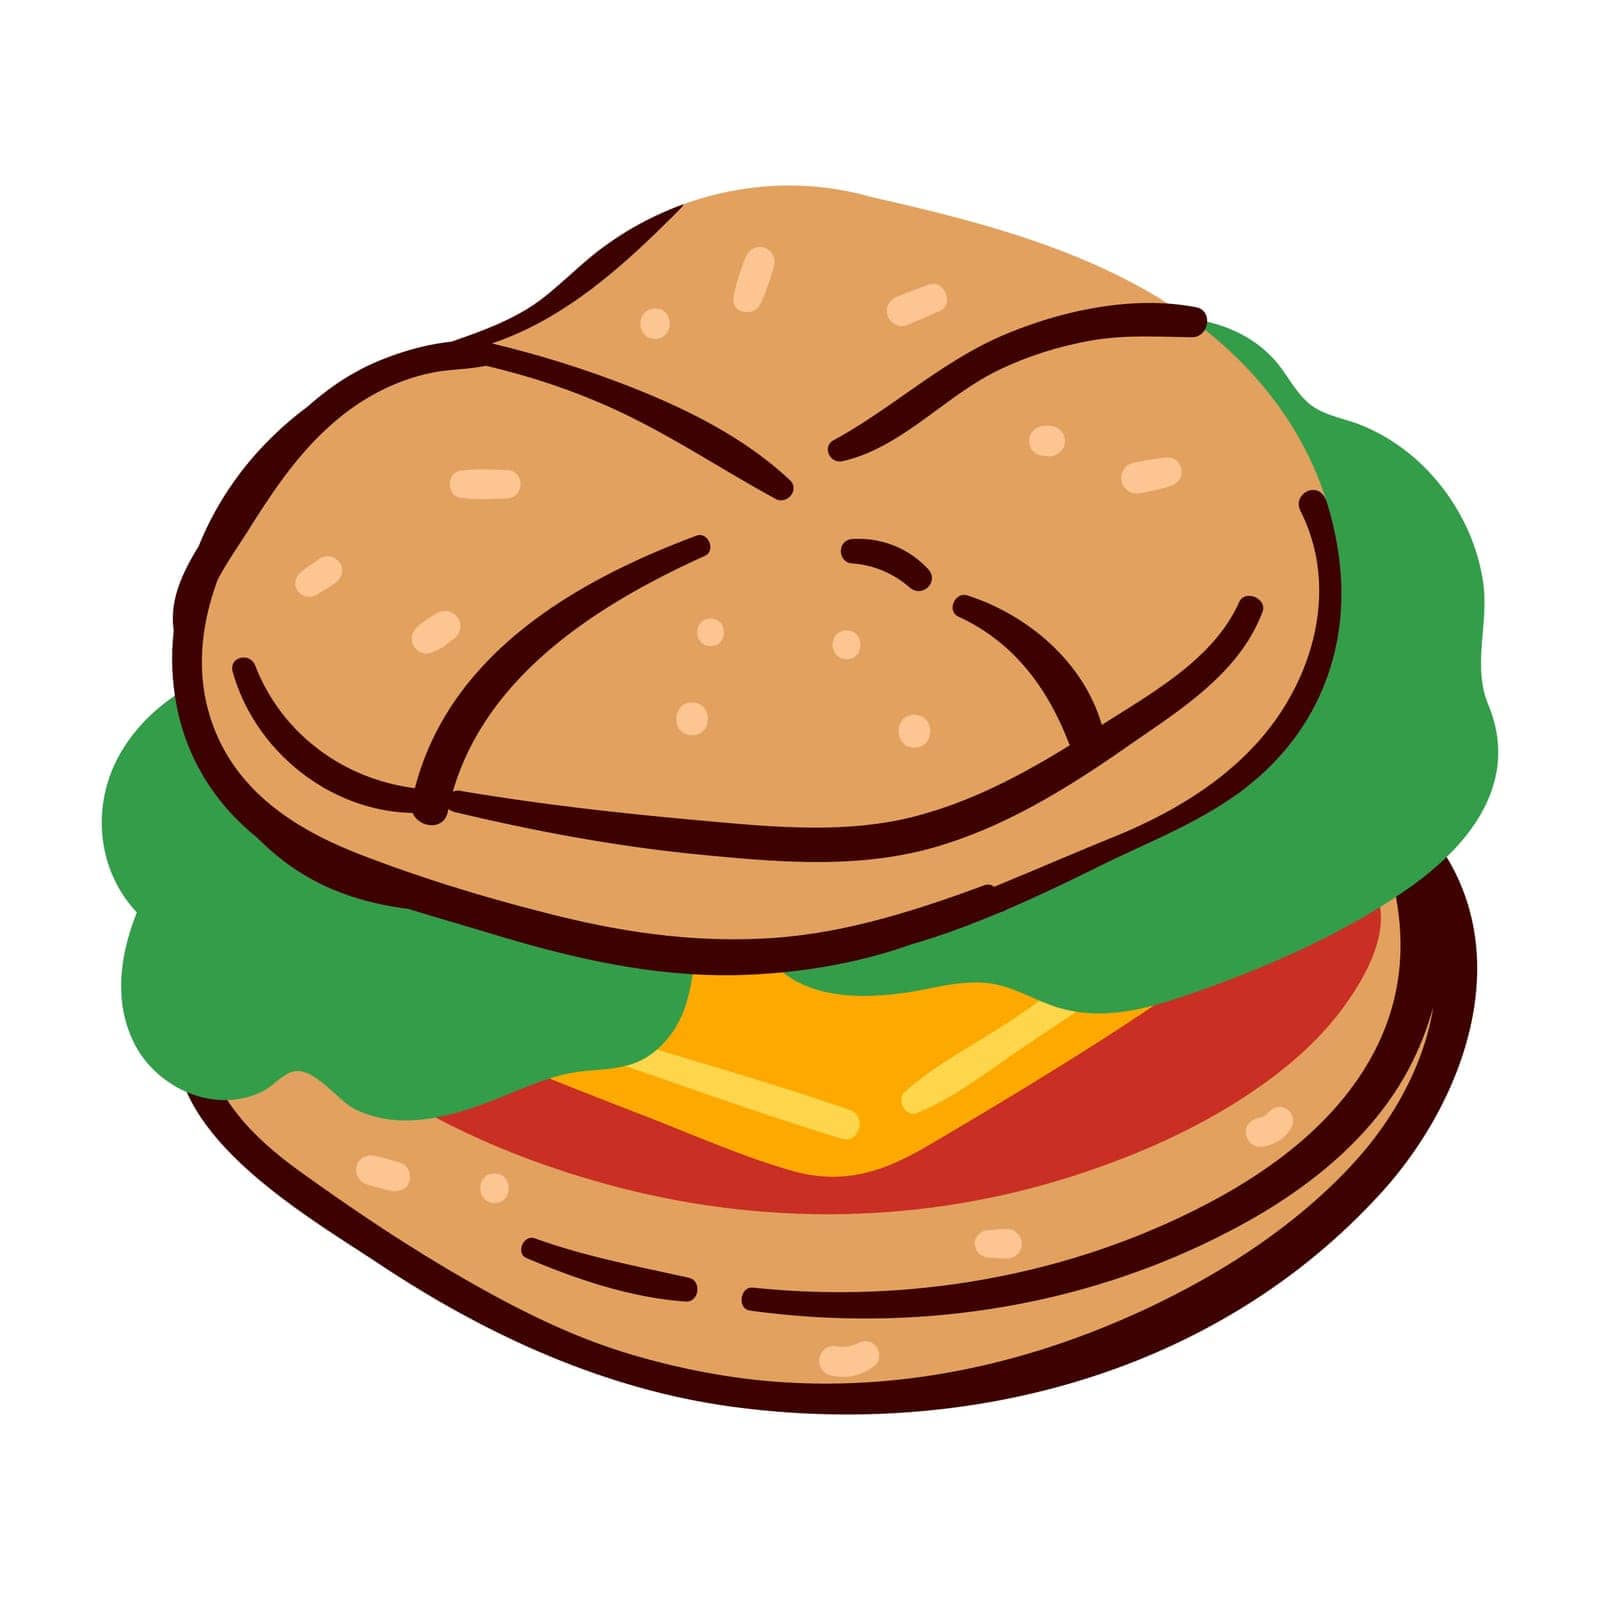 Cheeseburger or hamburger, restaurant or diner menu food by Sonulkaster